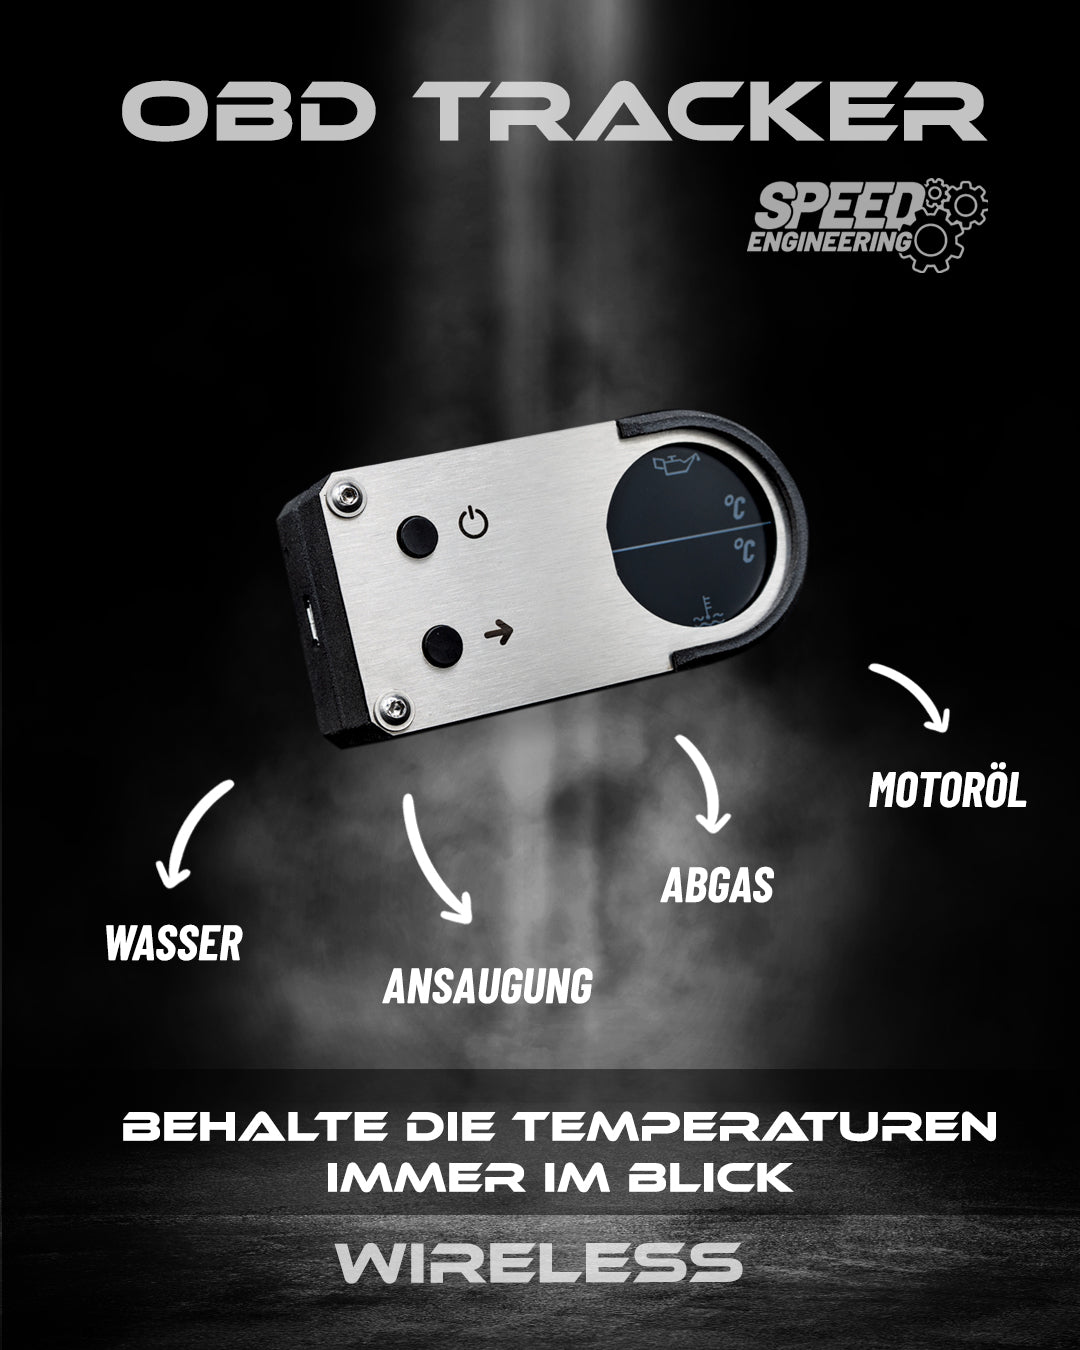 SPEED OBD Tracker – Öltemperatur Check passend für GR Yaris, BMW B48, B58, S55, Toyota Supra, GT86, Ford Fiesta ST